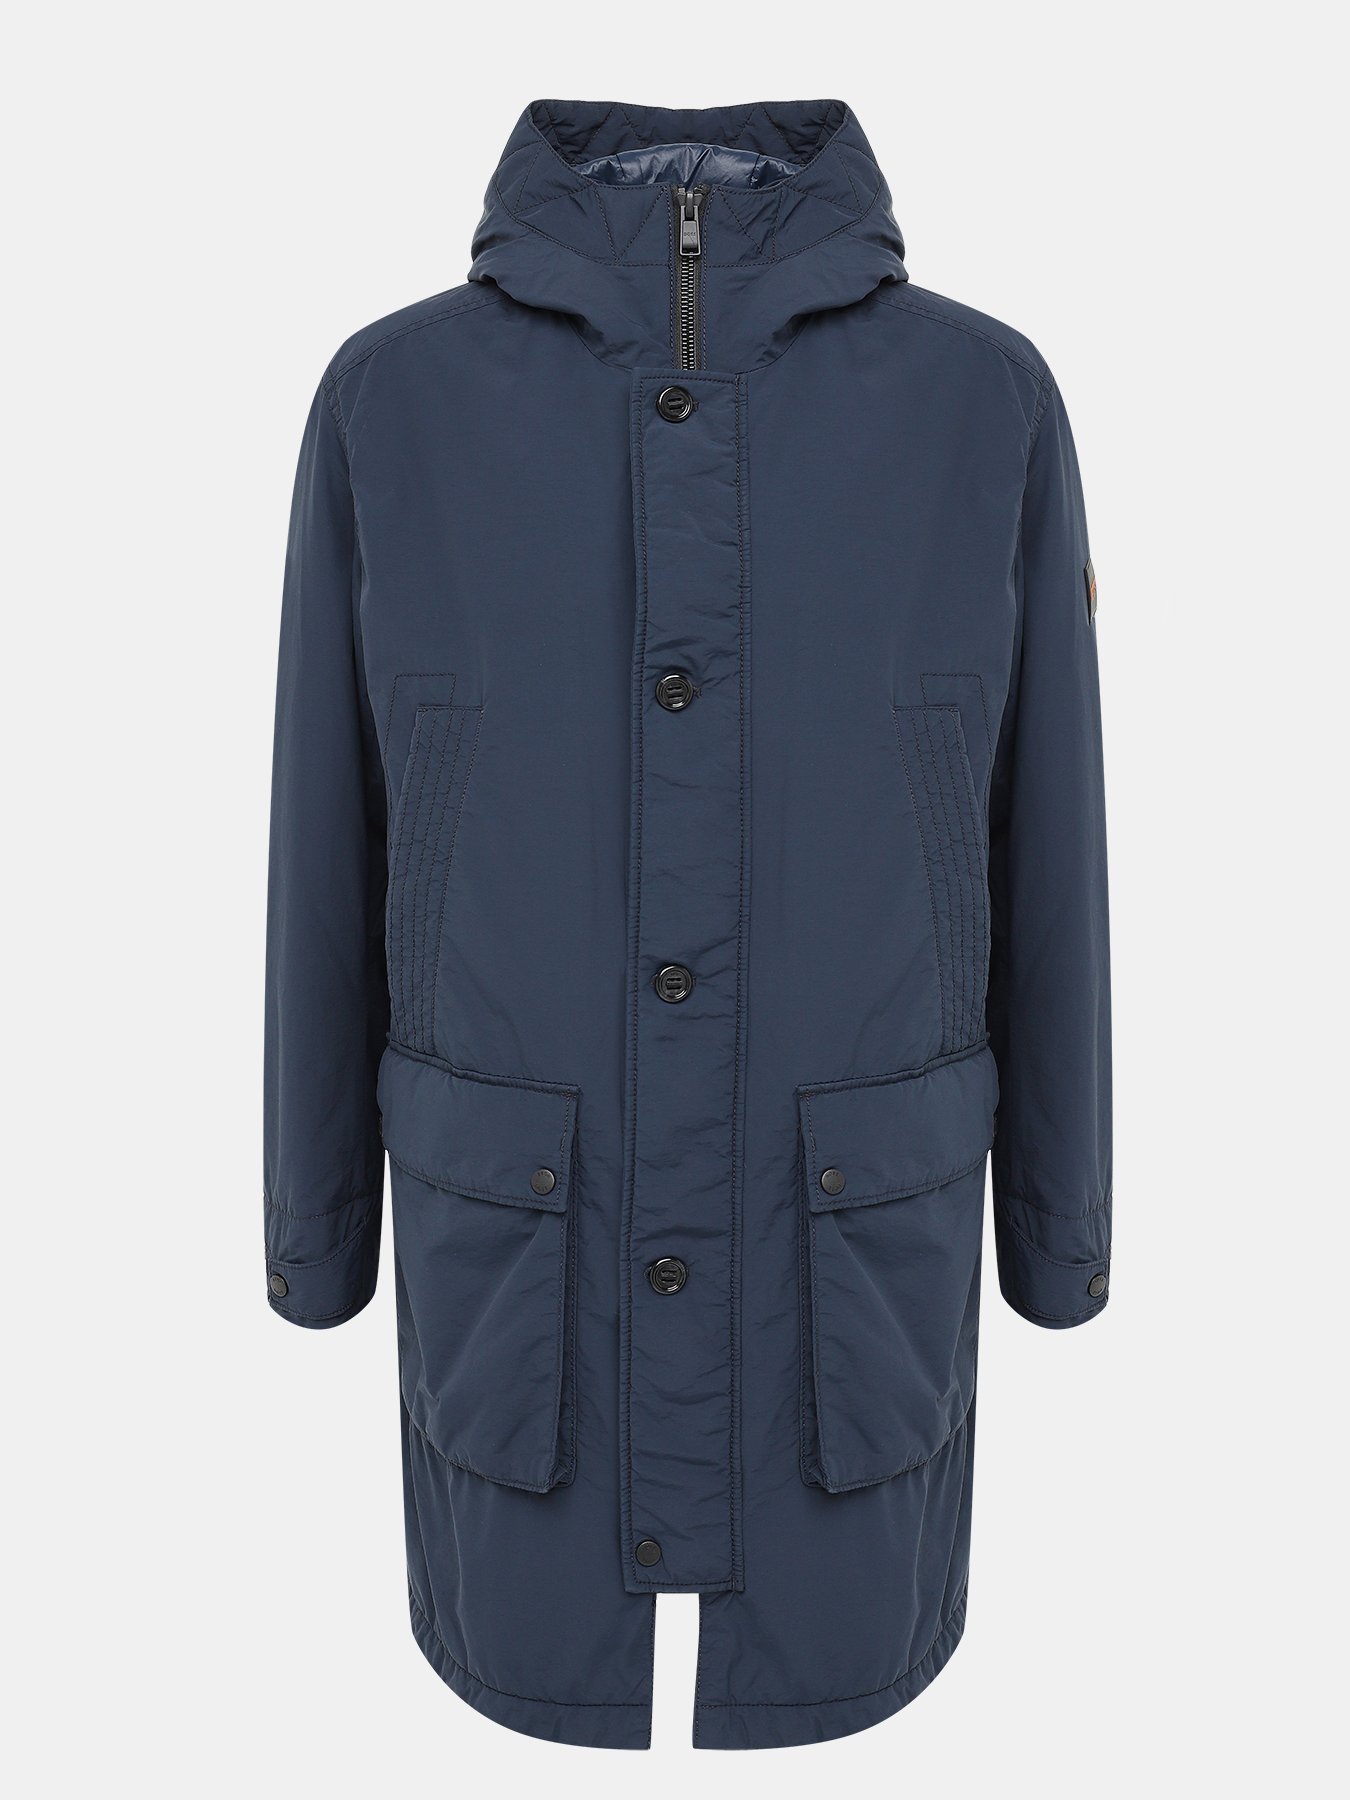 Удлиненная куртка Olgara BOSS 437892-029, цвет темно-синий, размер 56 - фото 1